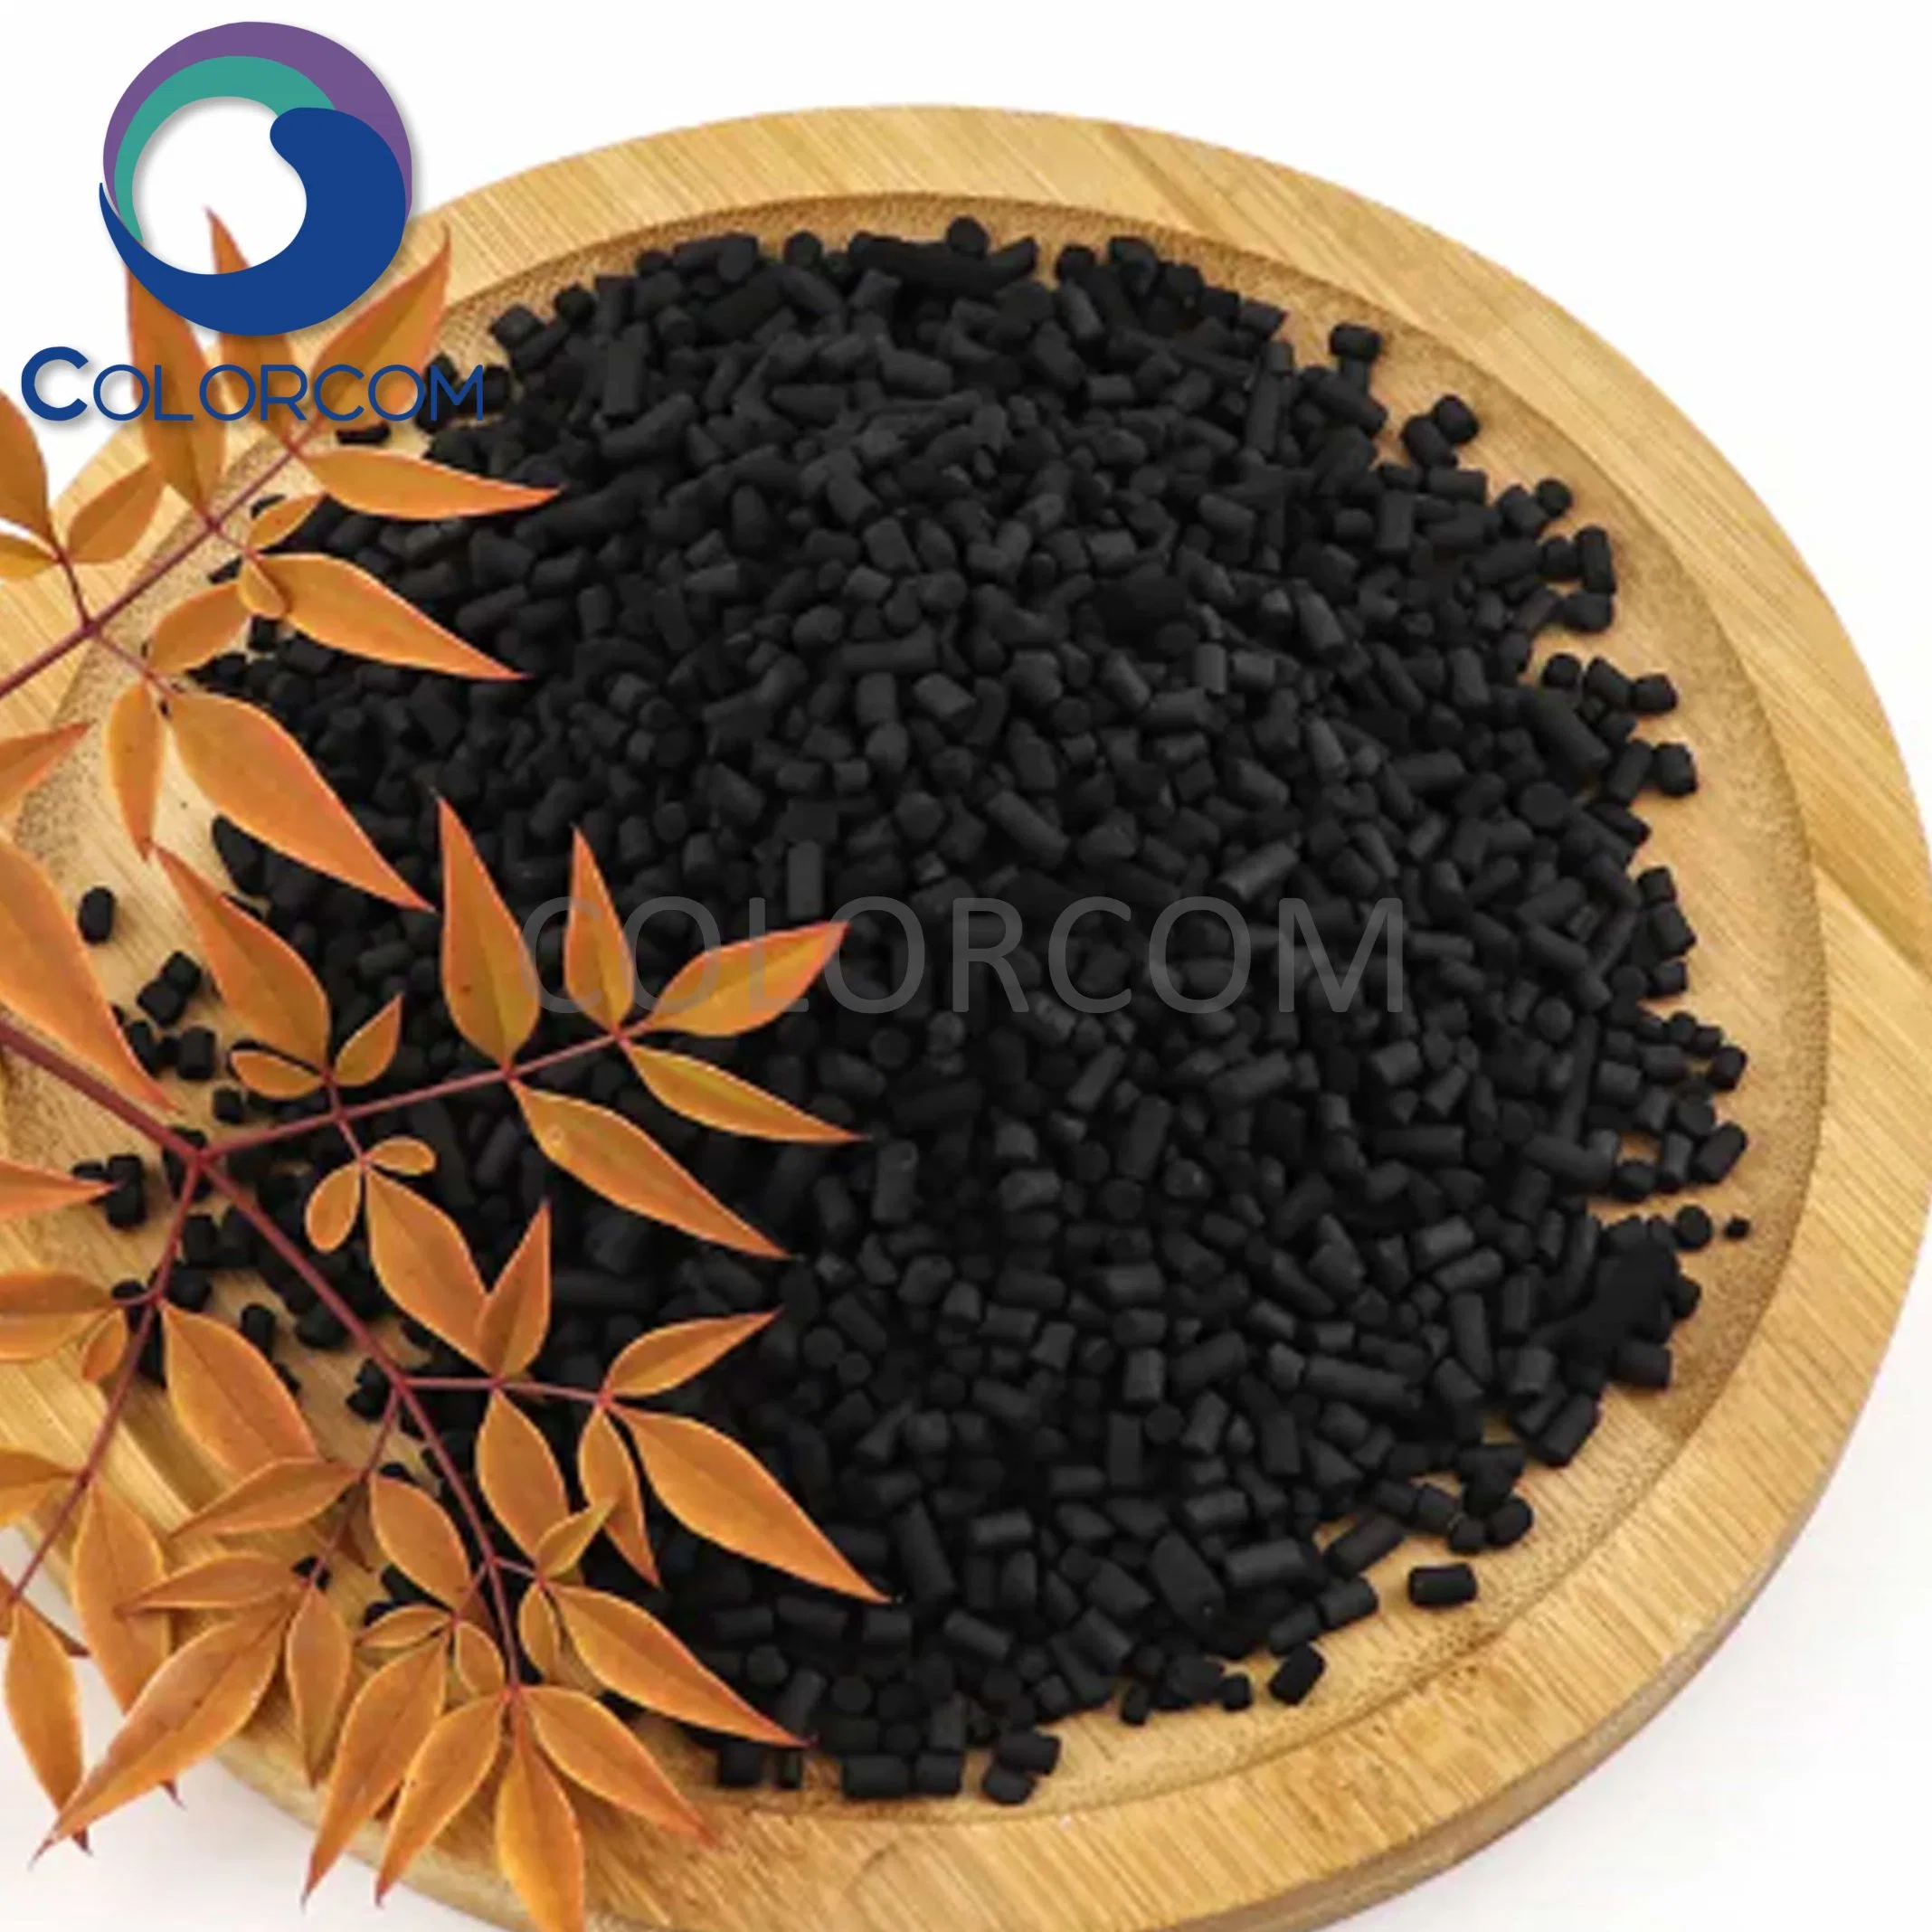 Pigment Carbon Black Equivalent to Regal 660r Black Pigment Black 7